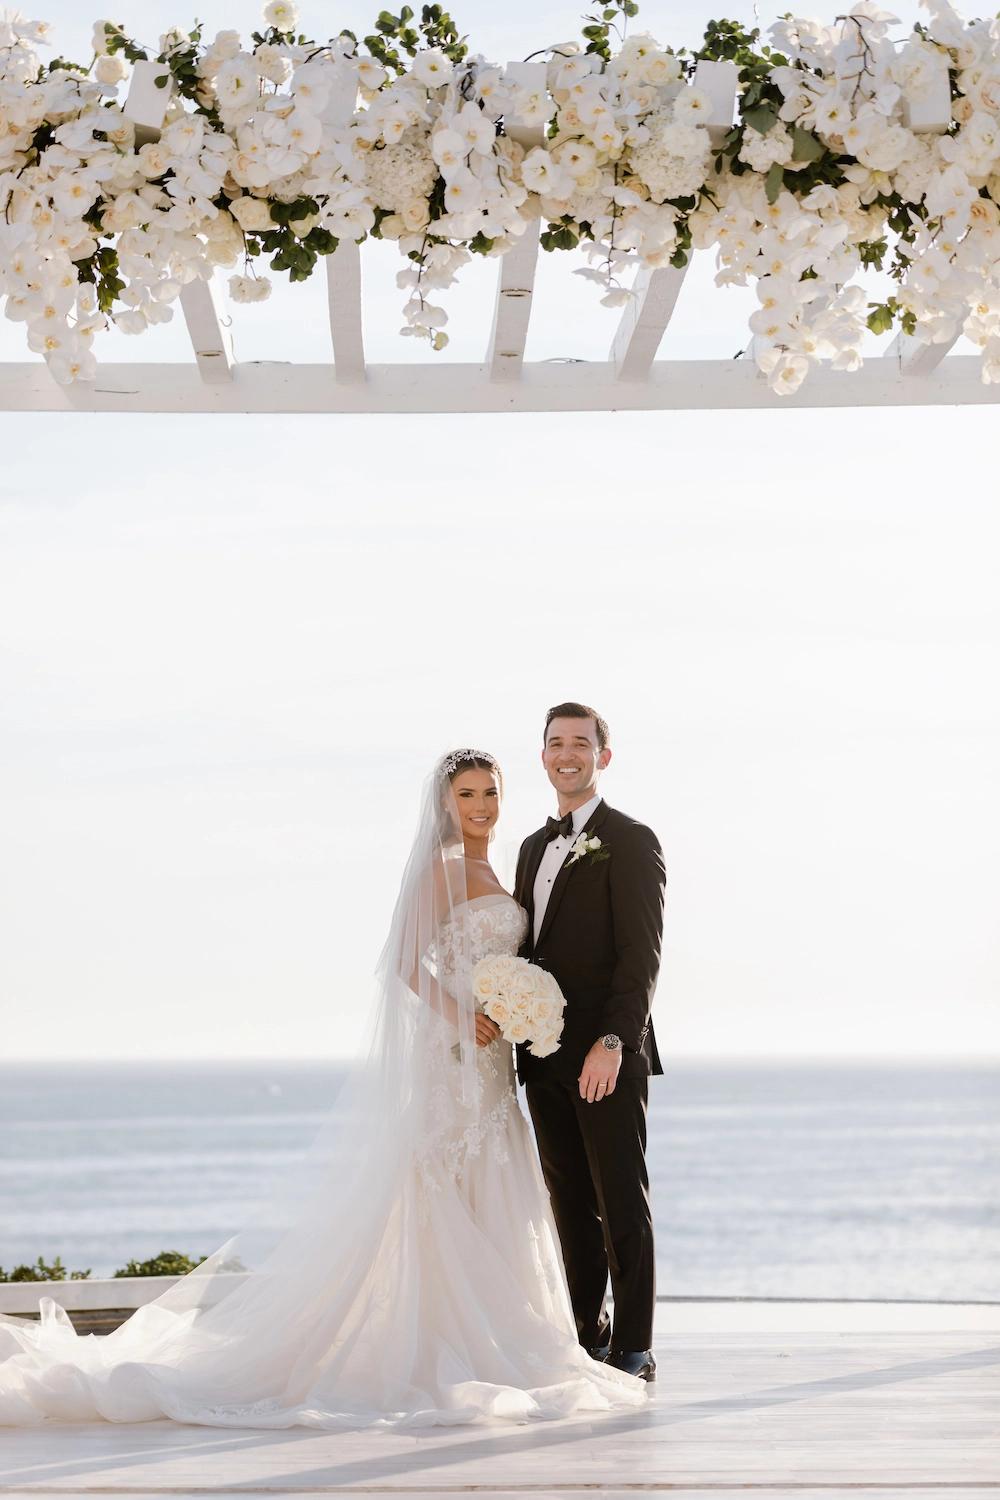 Jennifer Marries Joe In Strapless Mermaid Dress For Wedding In Cabo. Desktop Image